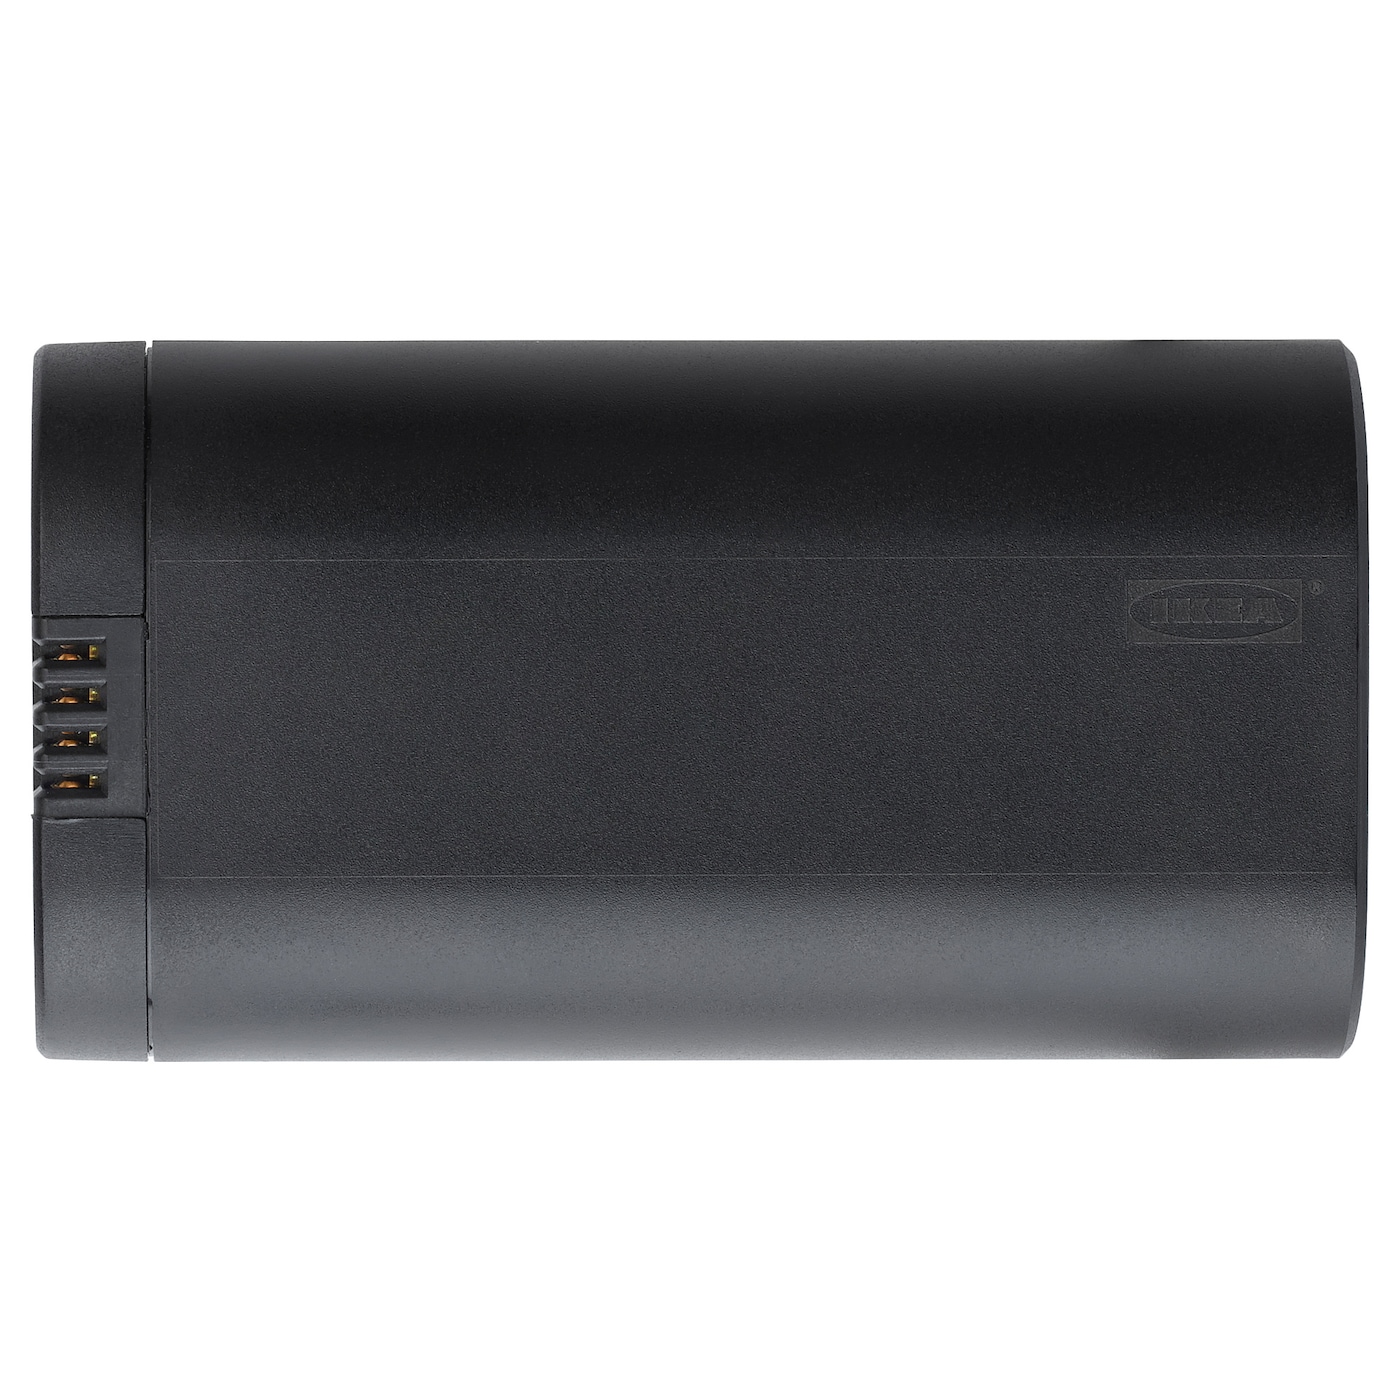 Батарея - BRAUNIT IKEA/ БРАУНИТ ИКЕА, 7,7х,4,2х2,4 см, черный